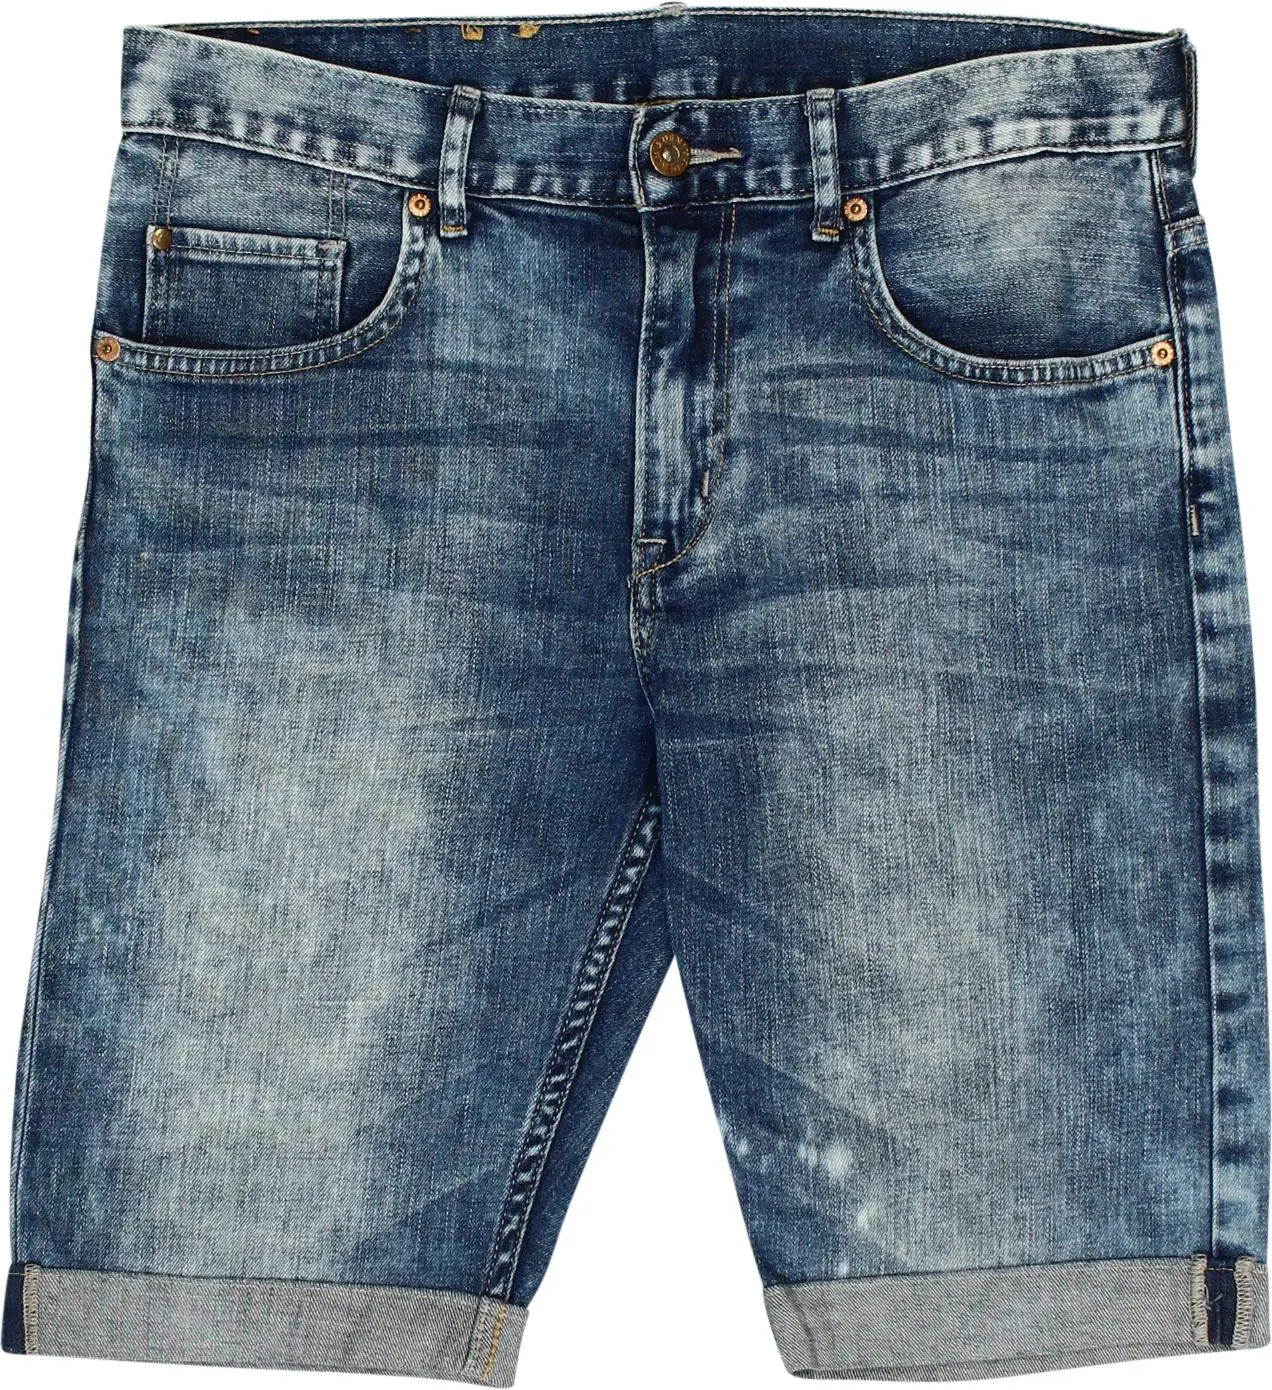 H&M - Blue Denim Shorts- ThriftTale.com - Vintage and second handclothing